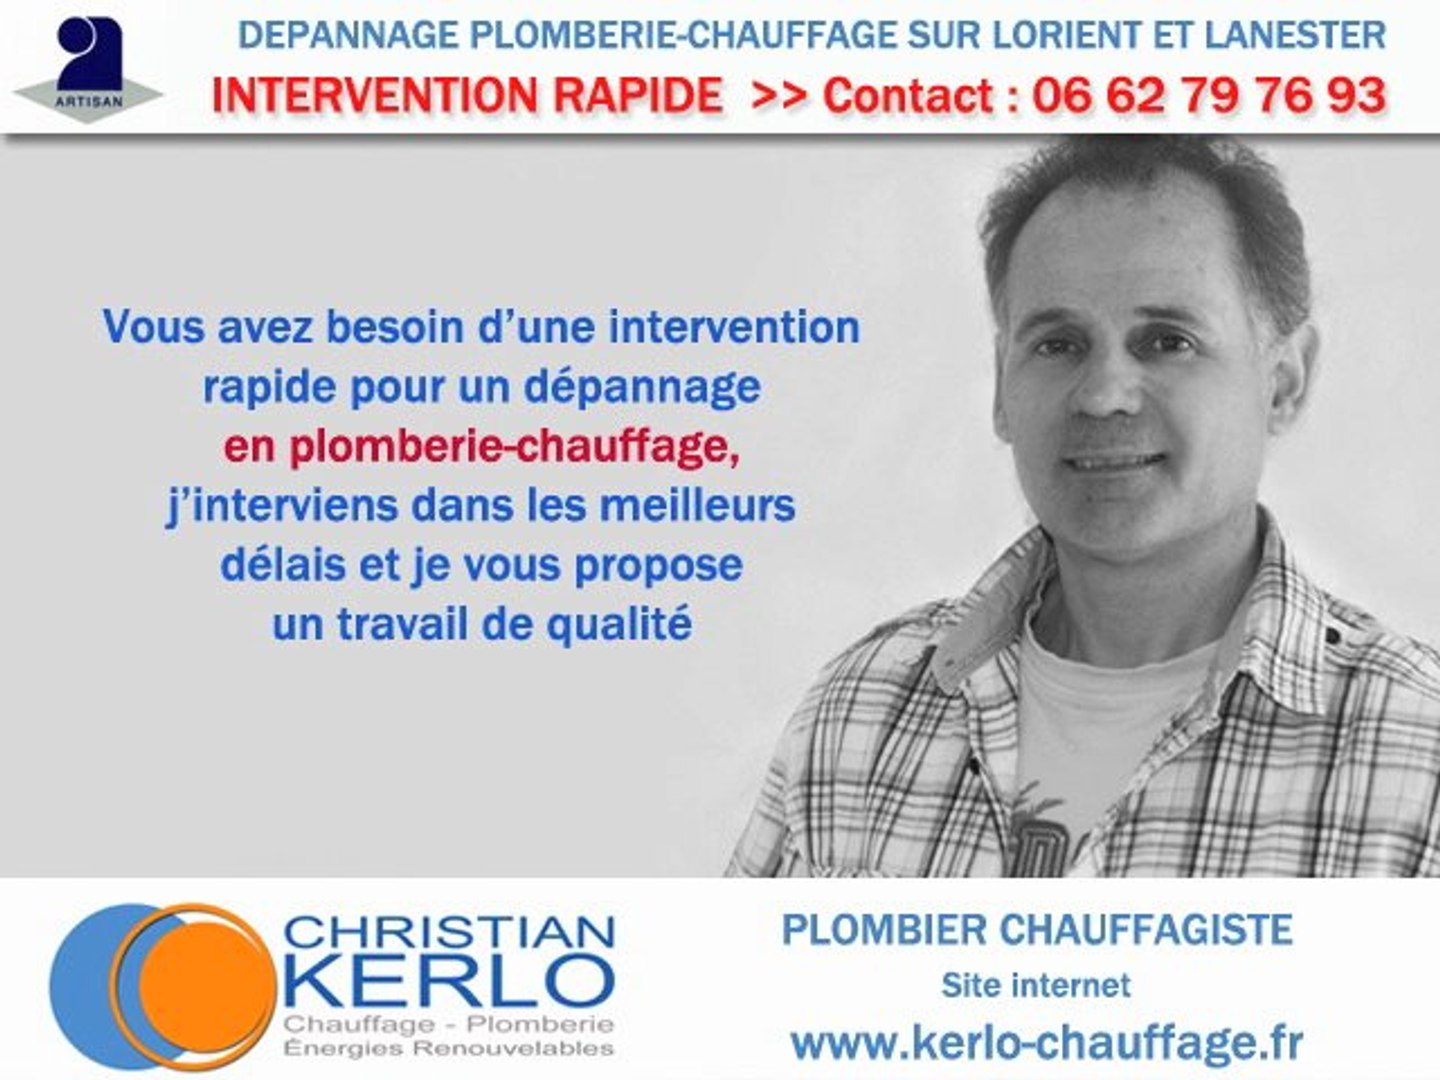 Dépannage Plomberie chauffage Lorient Lanester - Kerlo Christian plombier  artisan - Vidéo Dailymotion